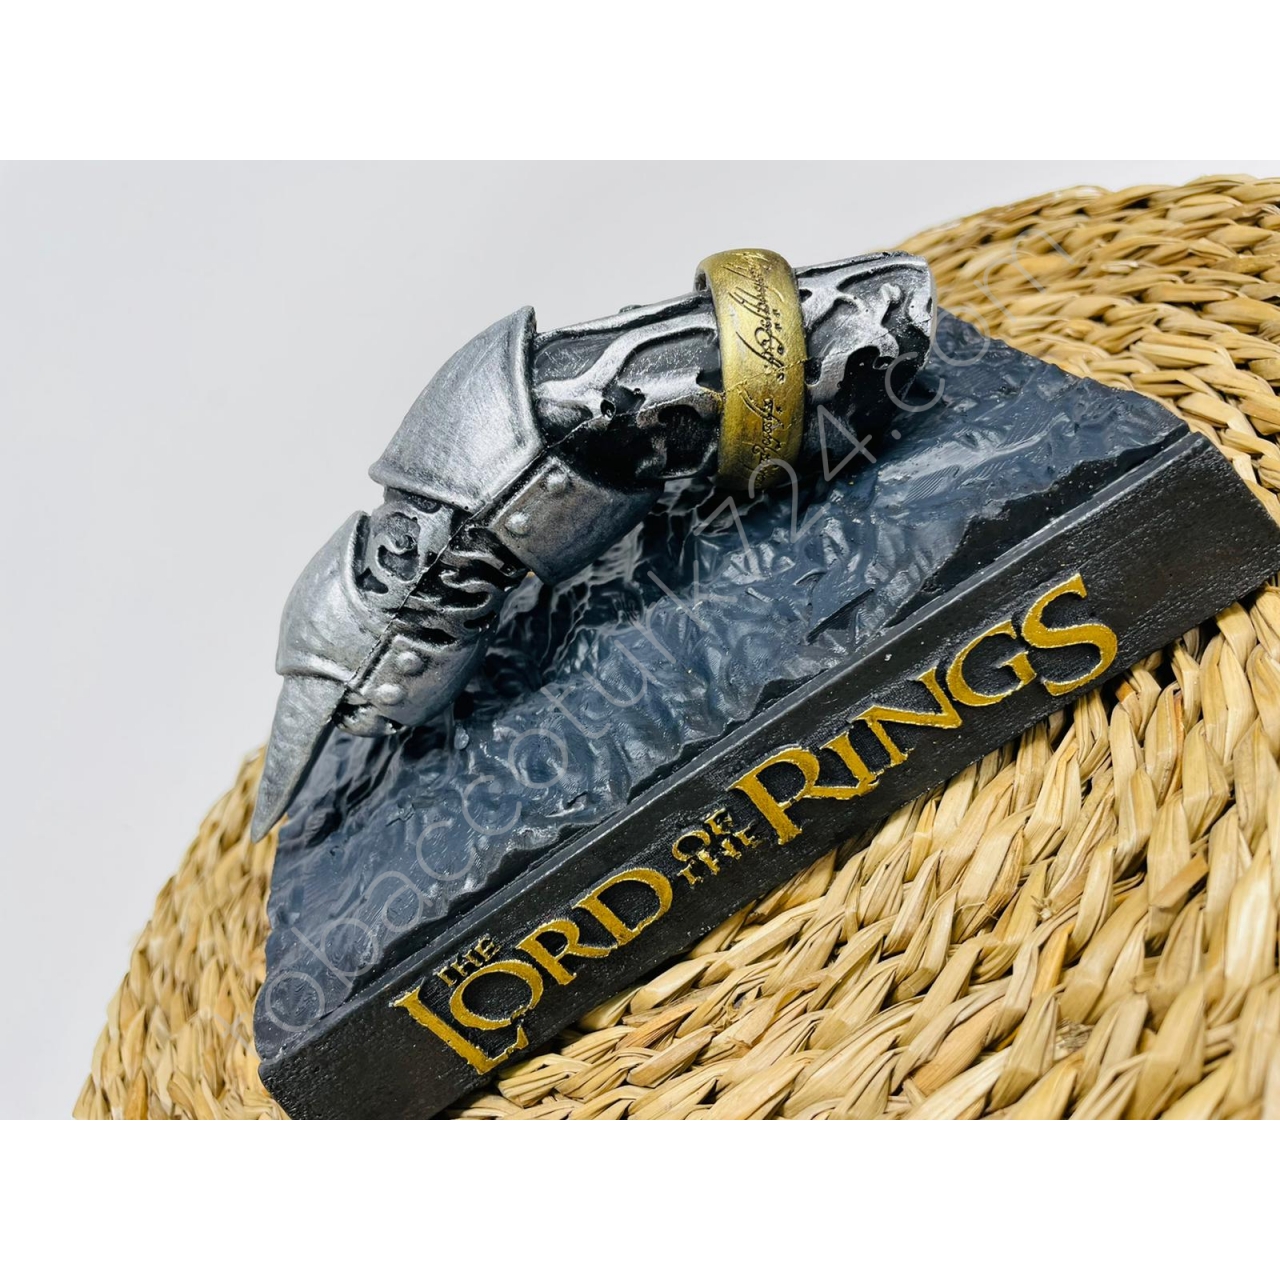 The Lord of The Rings /Yüzüklerin Efendisi Yüzüğü -17cm 